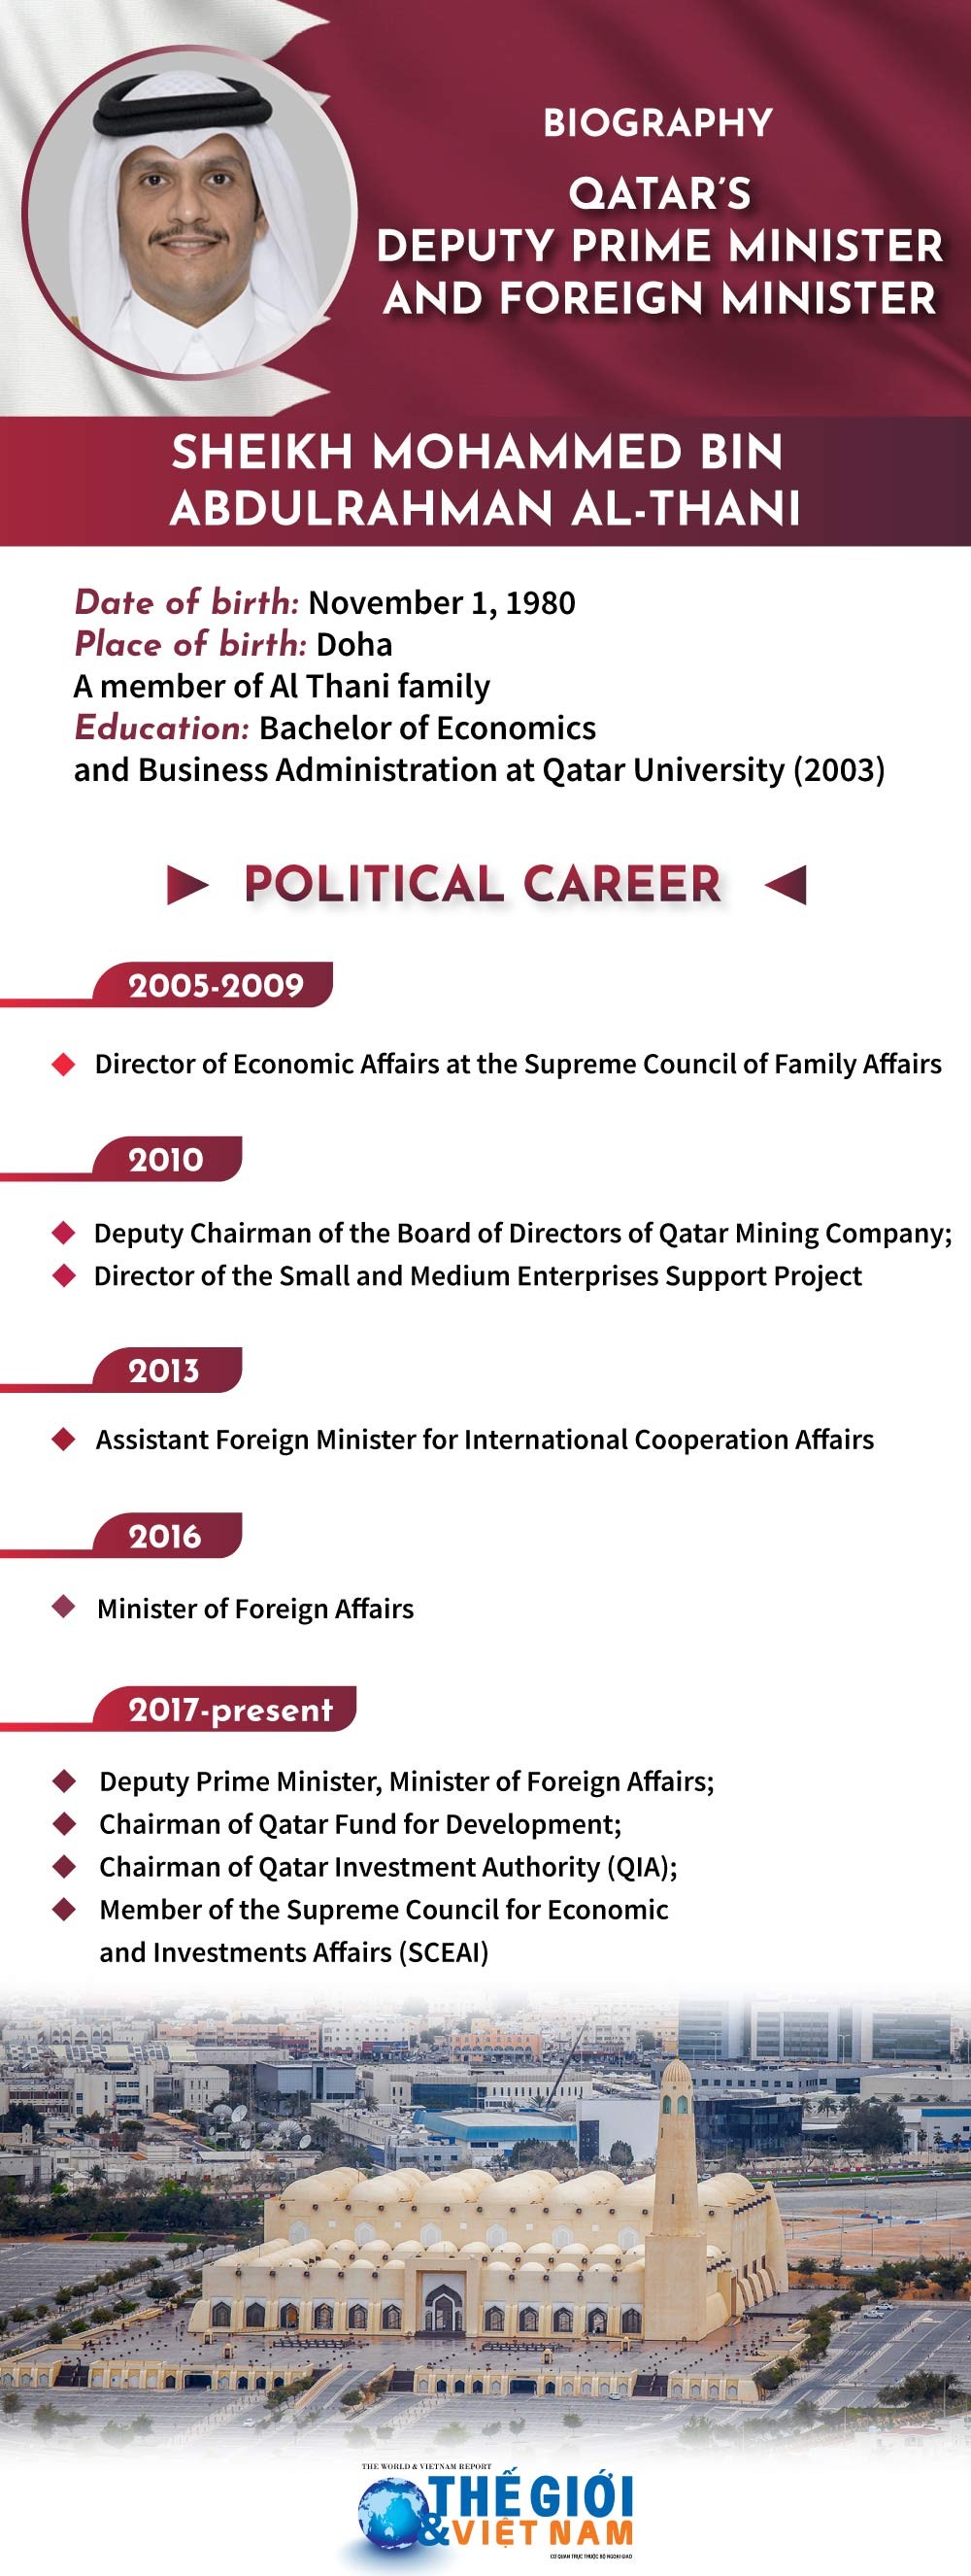 Biography of Qatari Deputy Prime Minister and Foreign Minister Sheikh Mohammed bin Abdulrahman Al-Thani